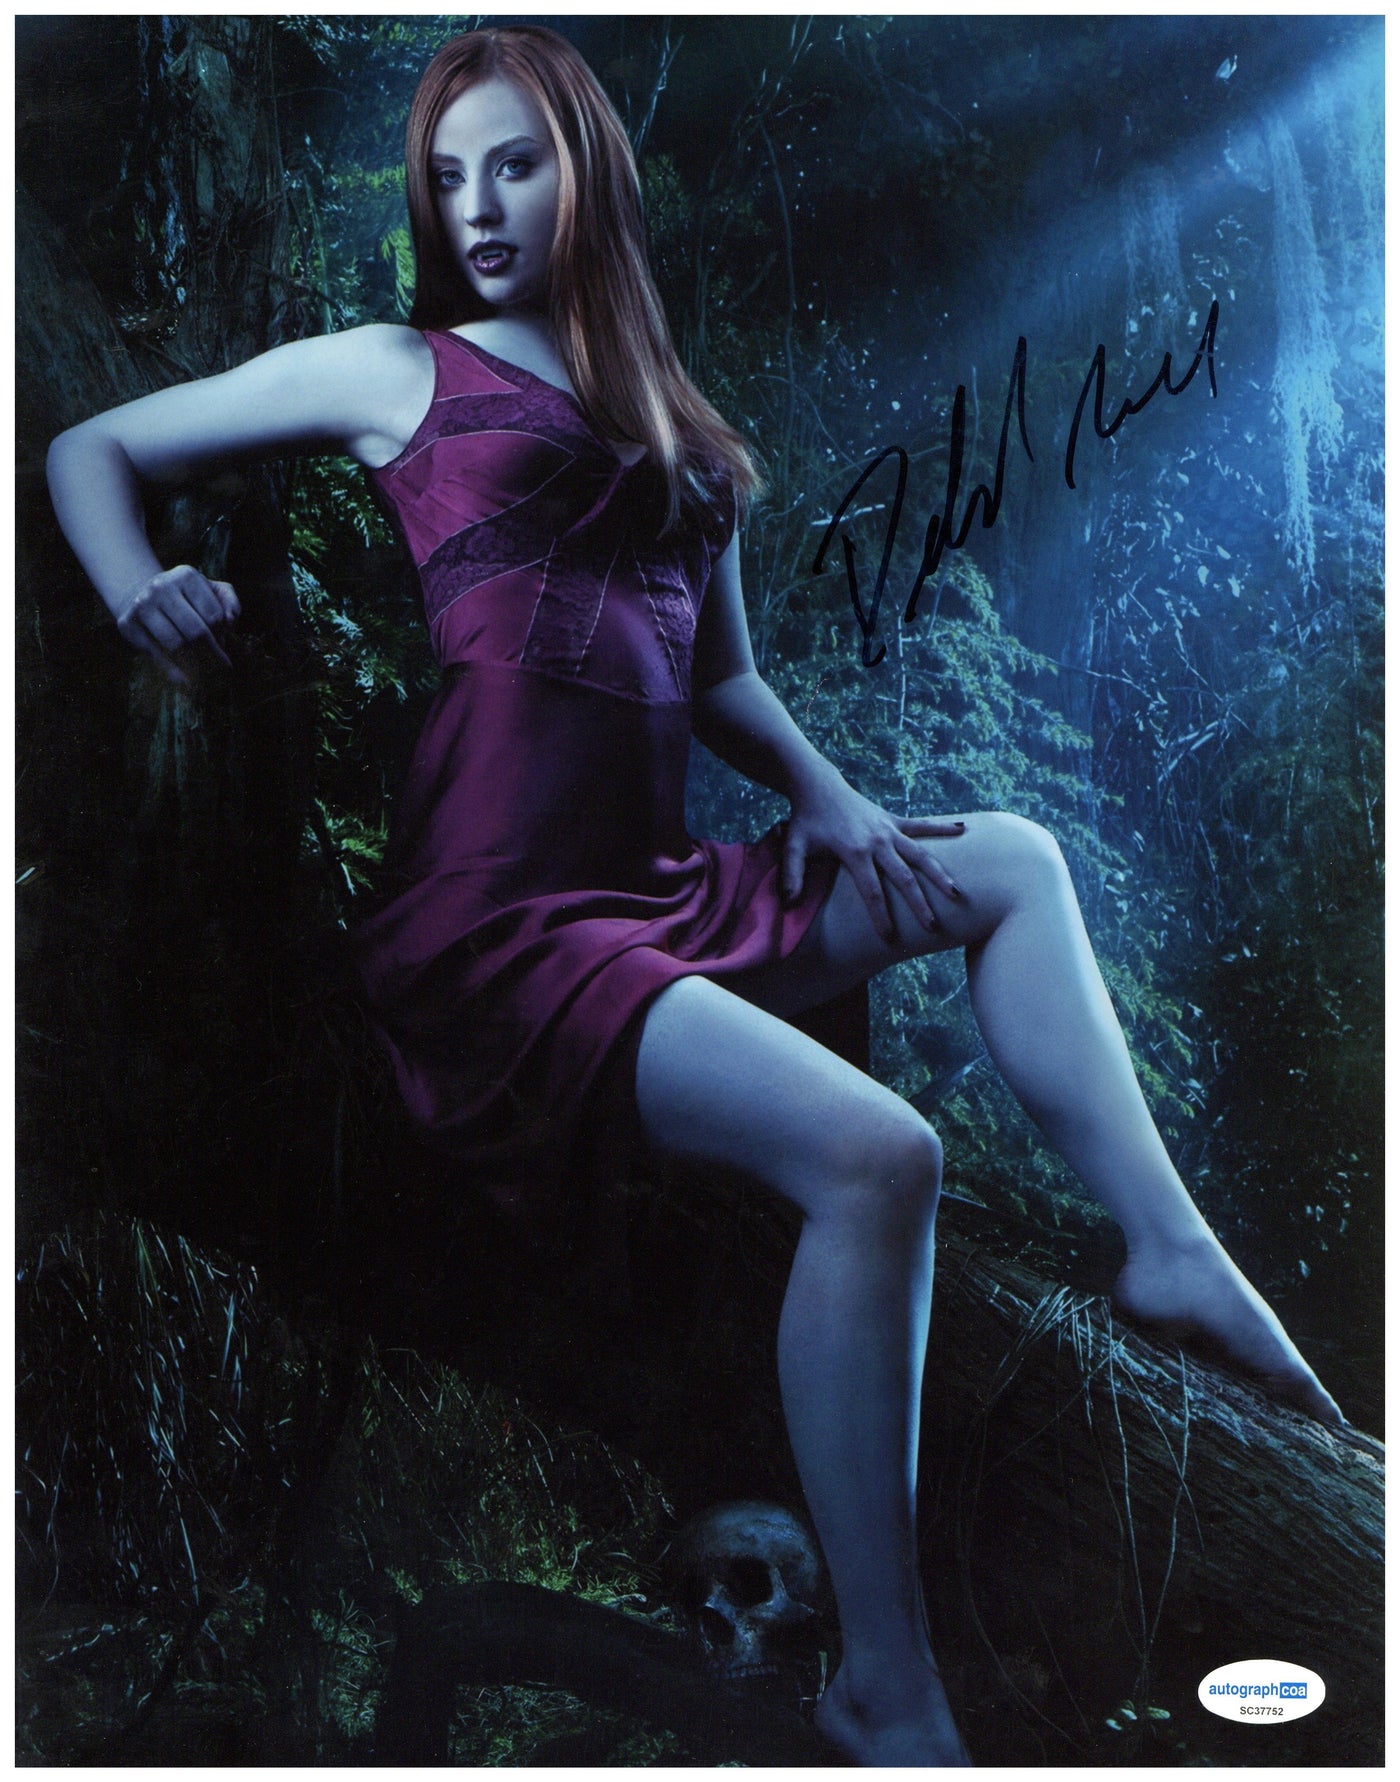 Deborah Ann Woll Signed 11x14 Photo True Blood Authentic Autographed ACOA